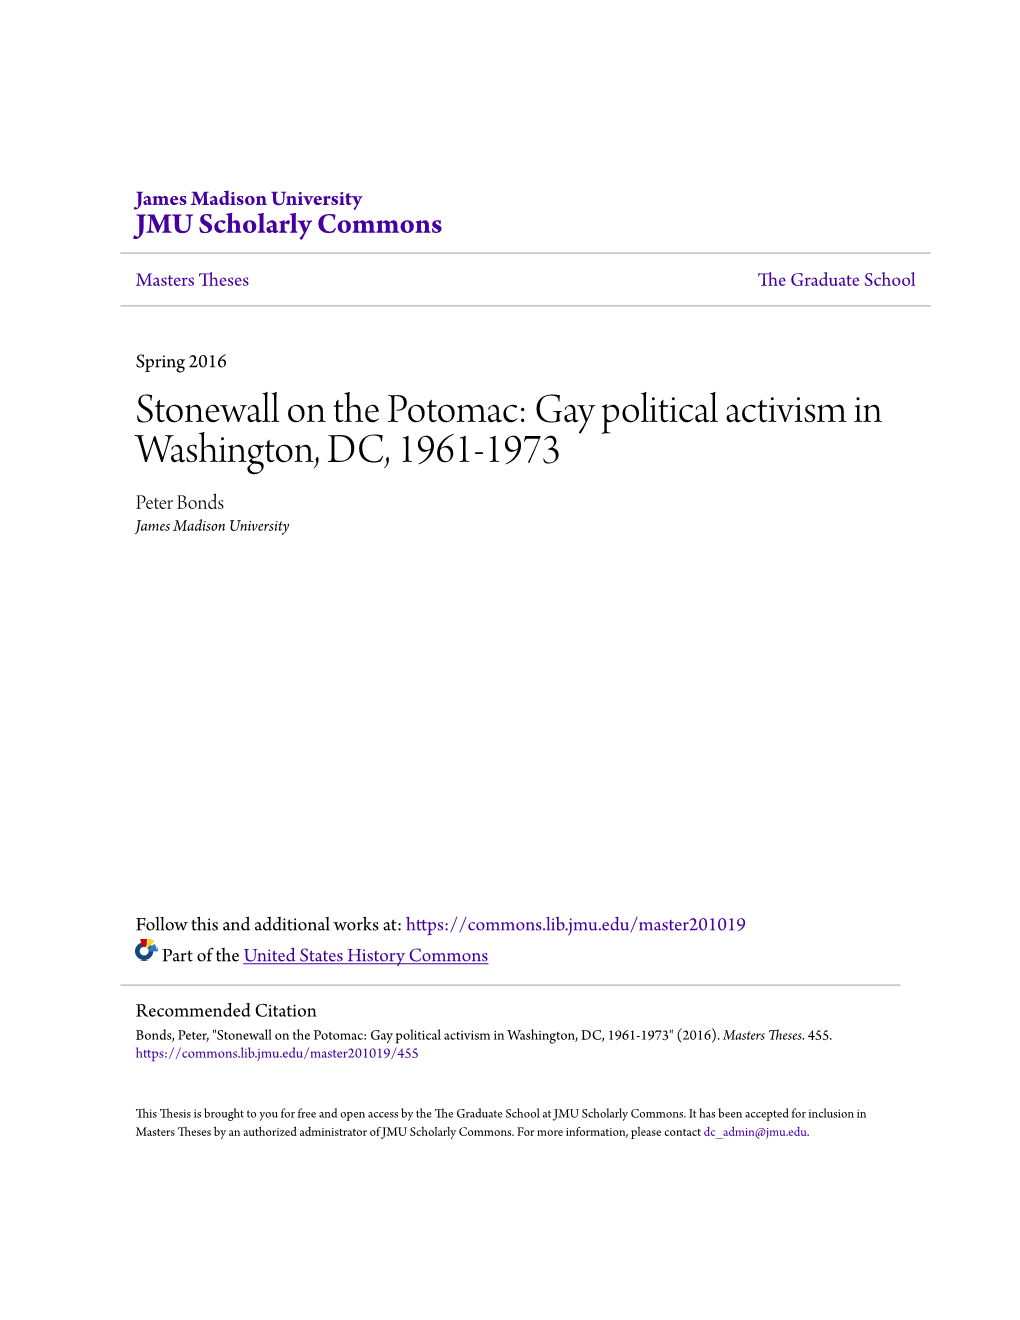 Gay Political Activism in Washington, DC, 1961-1973 Peter Bonds James Madison University